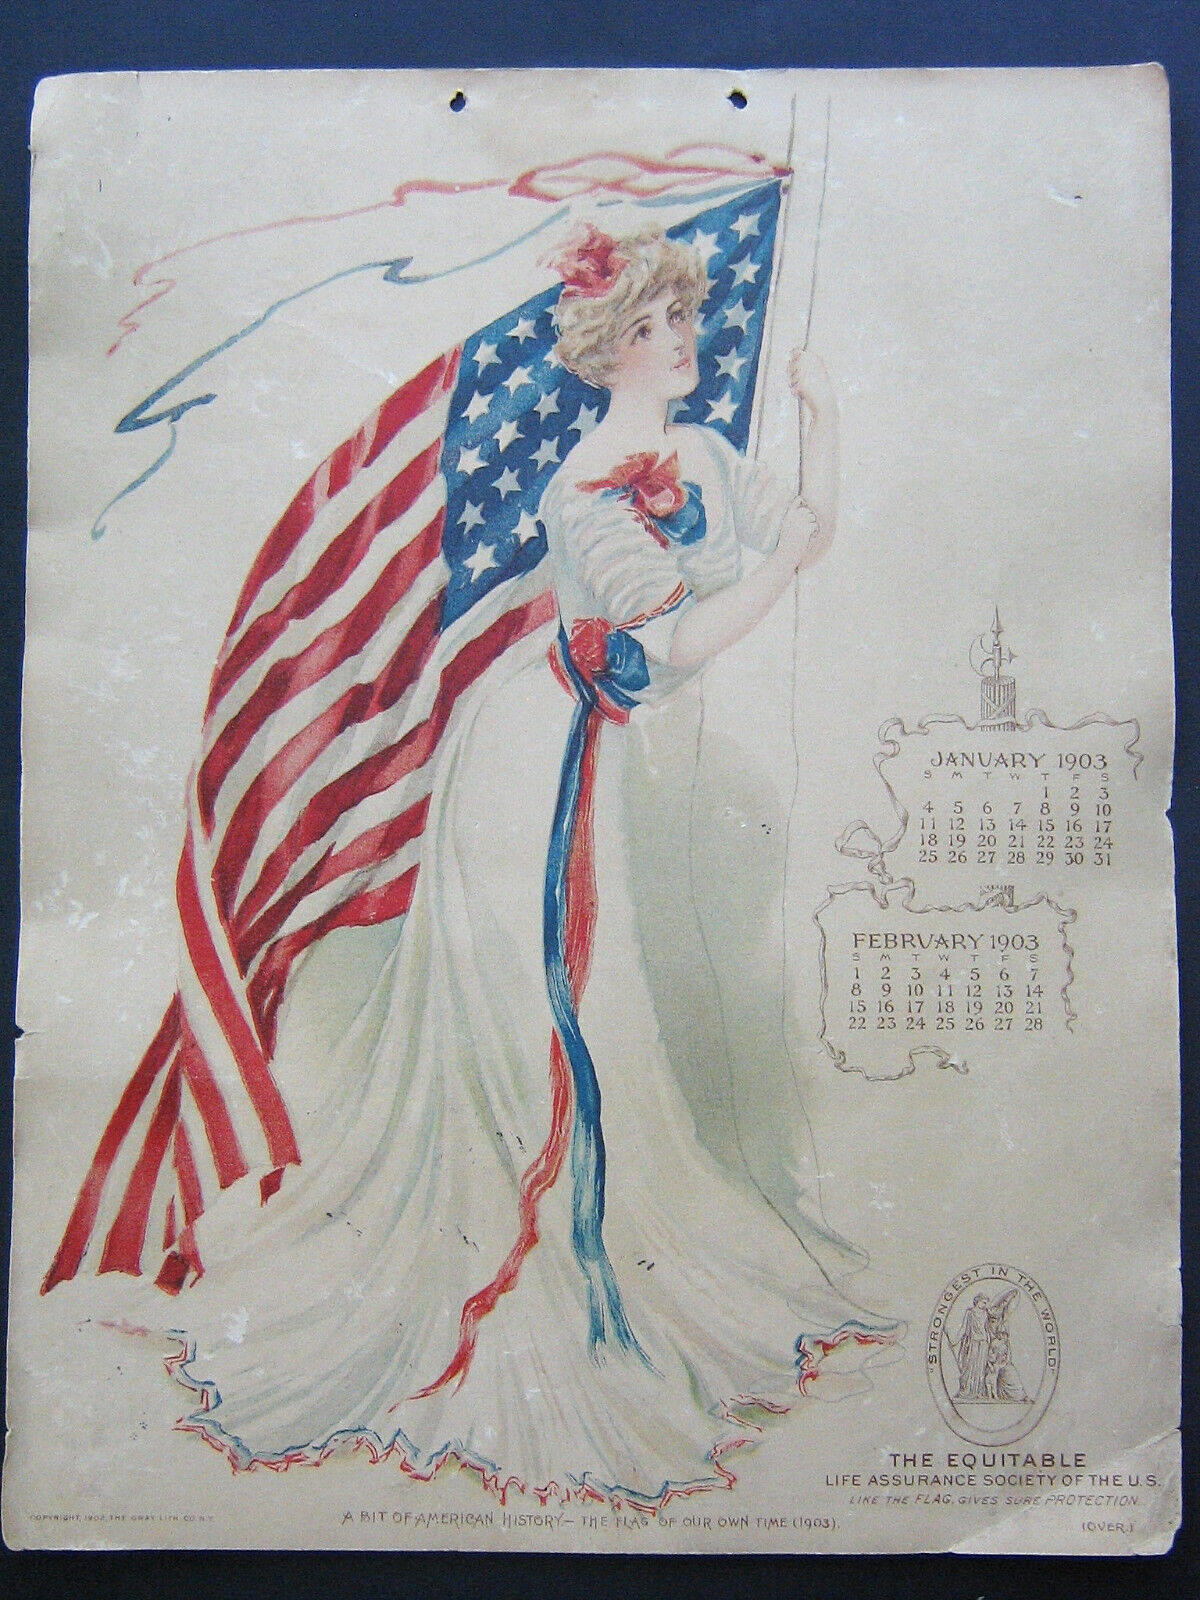 1903 Ad Calendar  Equitable Life Assurance Society (A Bit of American History)